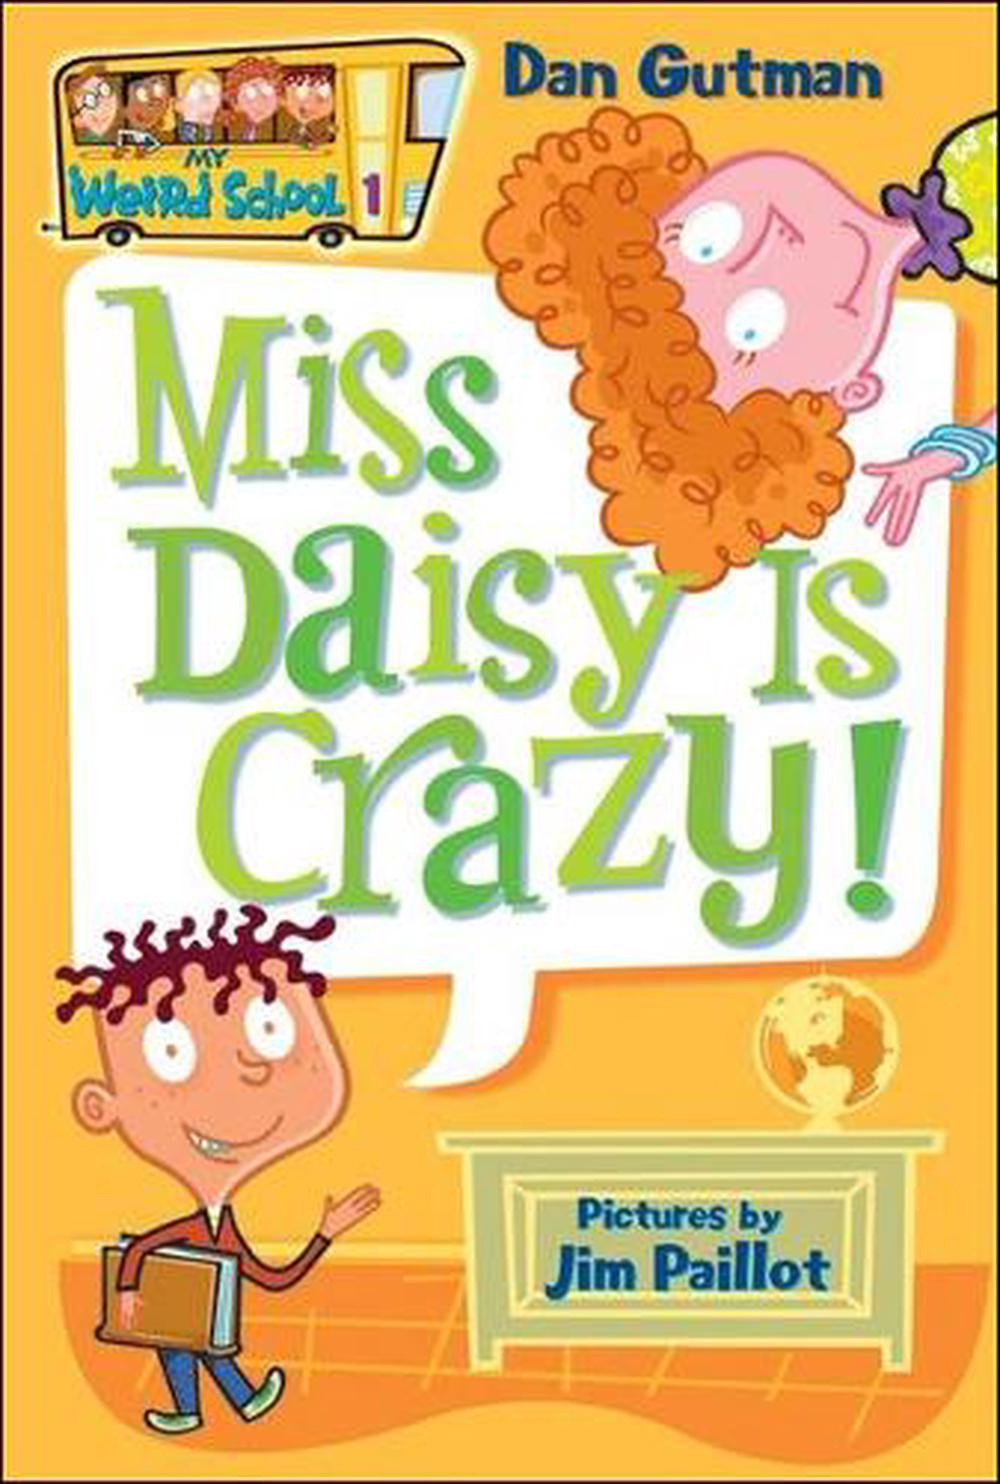 Miss daisy is crazy pdf